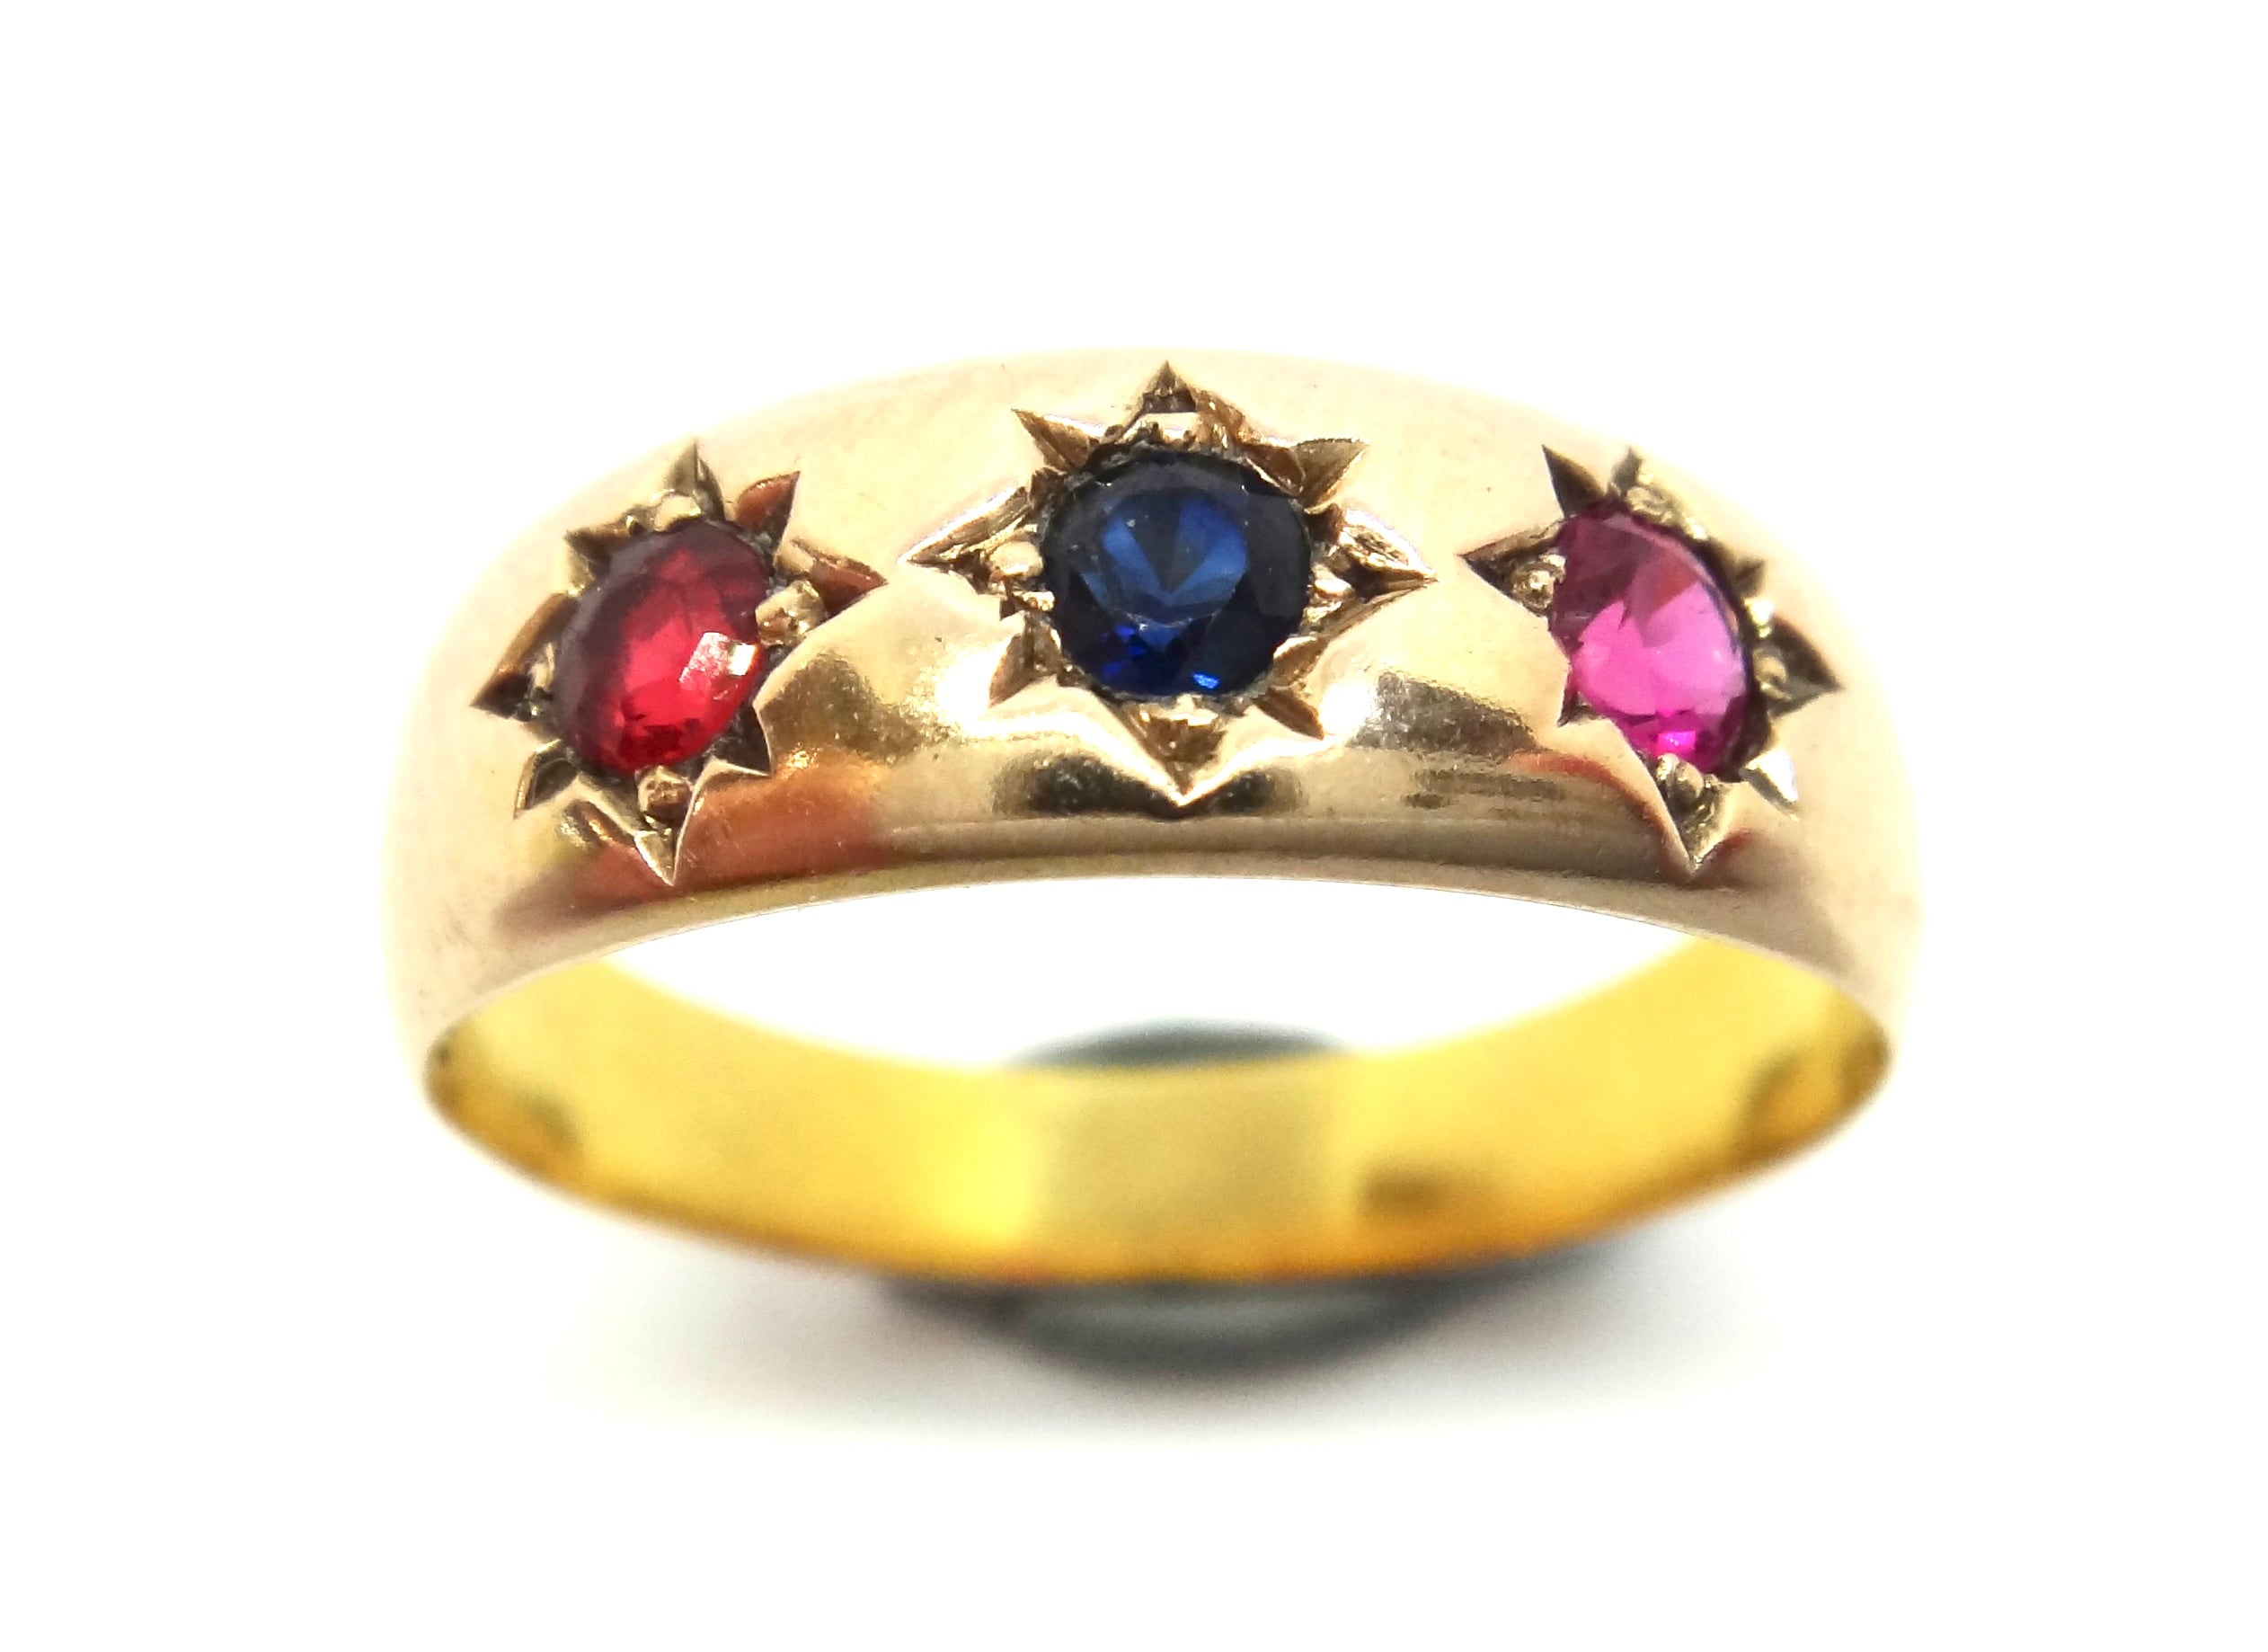 ANTIQUE 15ct GOLD, Ruby, Garnet & Sapphire Ring c.1900